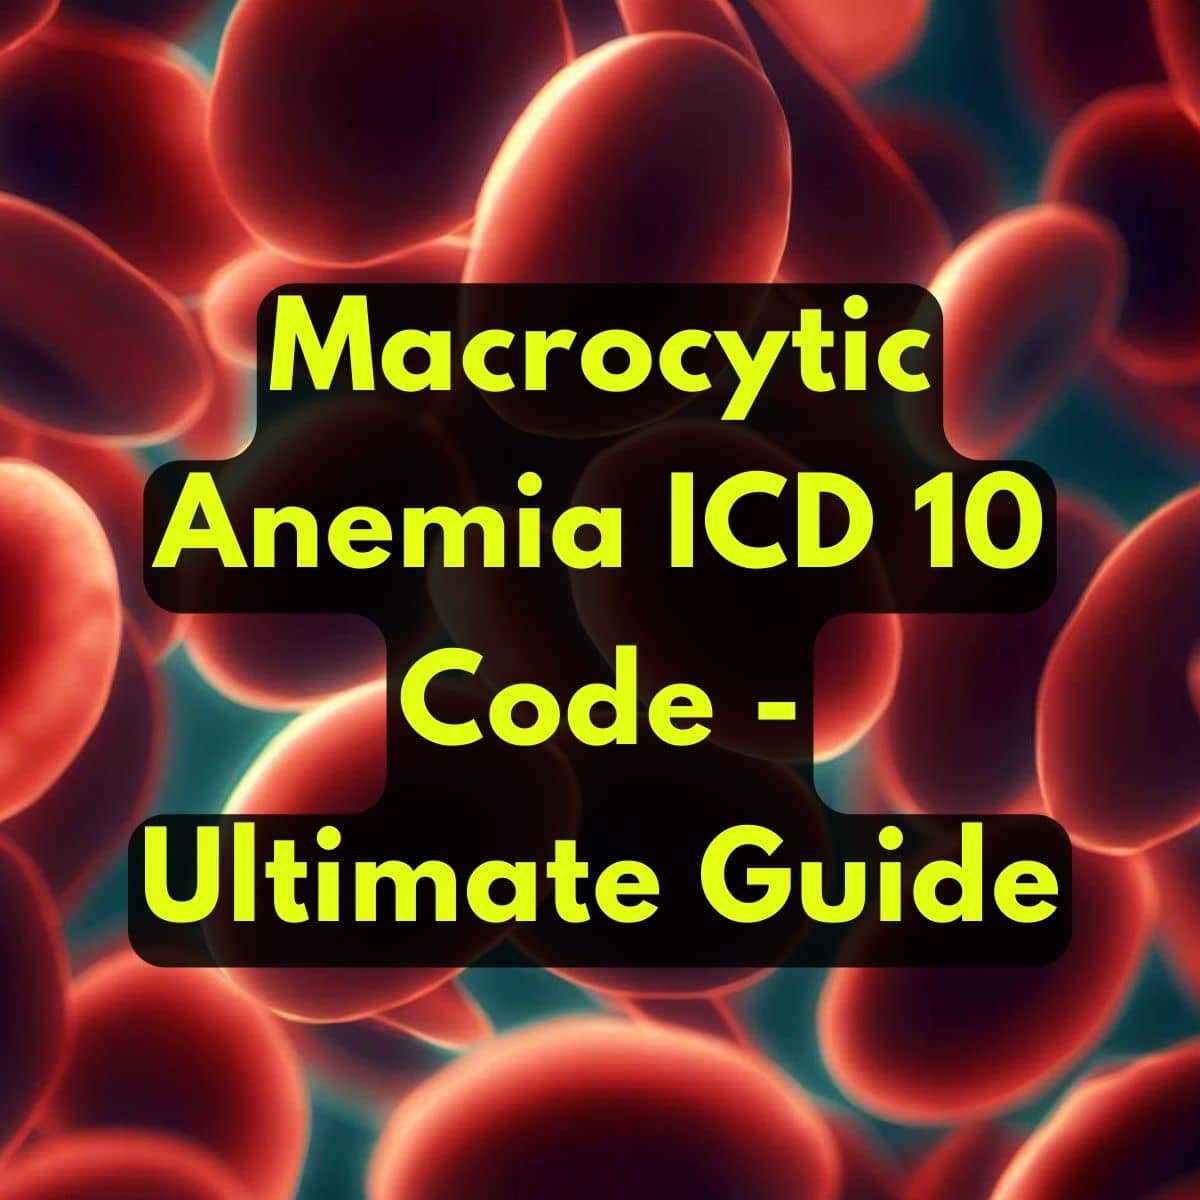 Macrocytic Anemia ICD 10 Code - Ultimate Guide